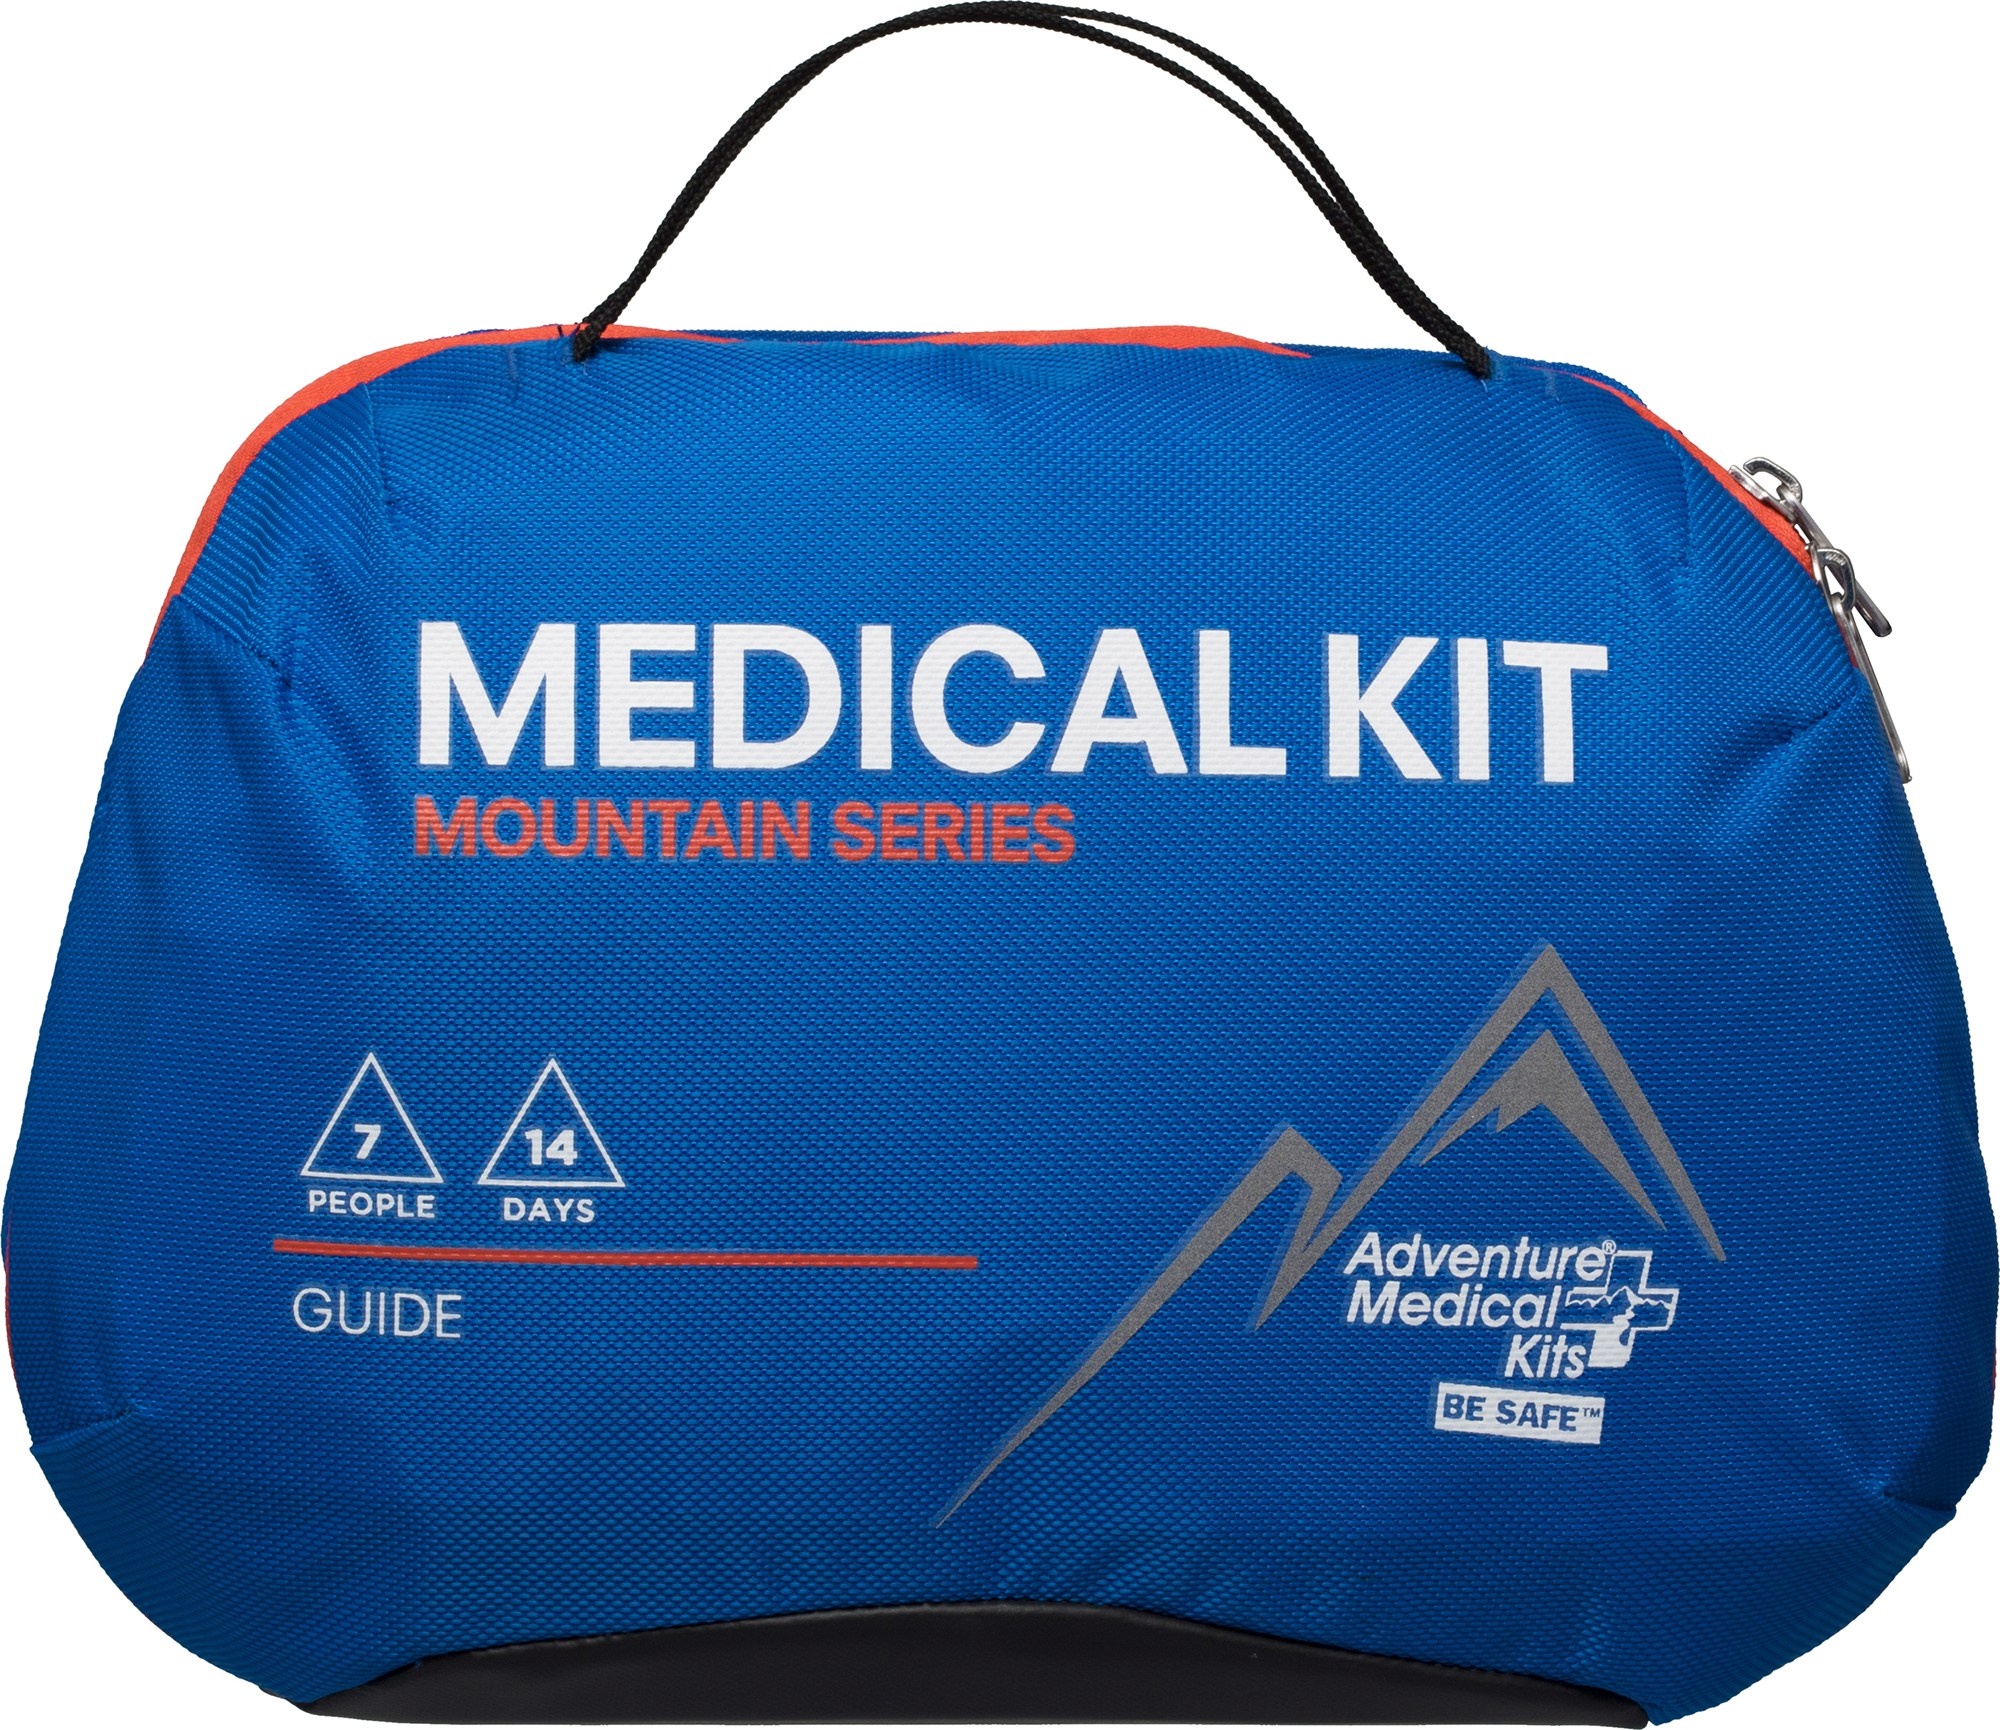 Медицинская аптечка Mountain Series Guide Adventure Medical Kits, синий quikclot trauma pack pro жгут quikclot adventure medical kits цвет one color